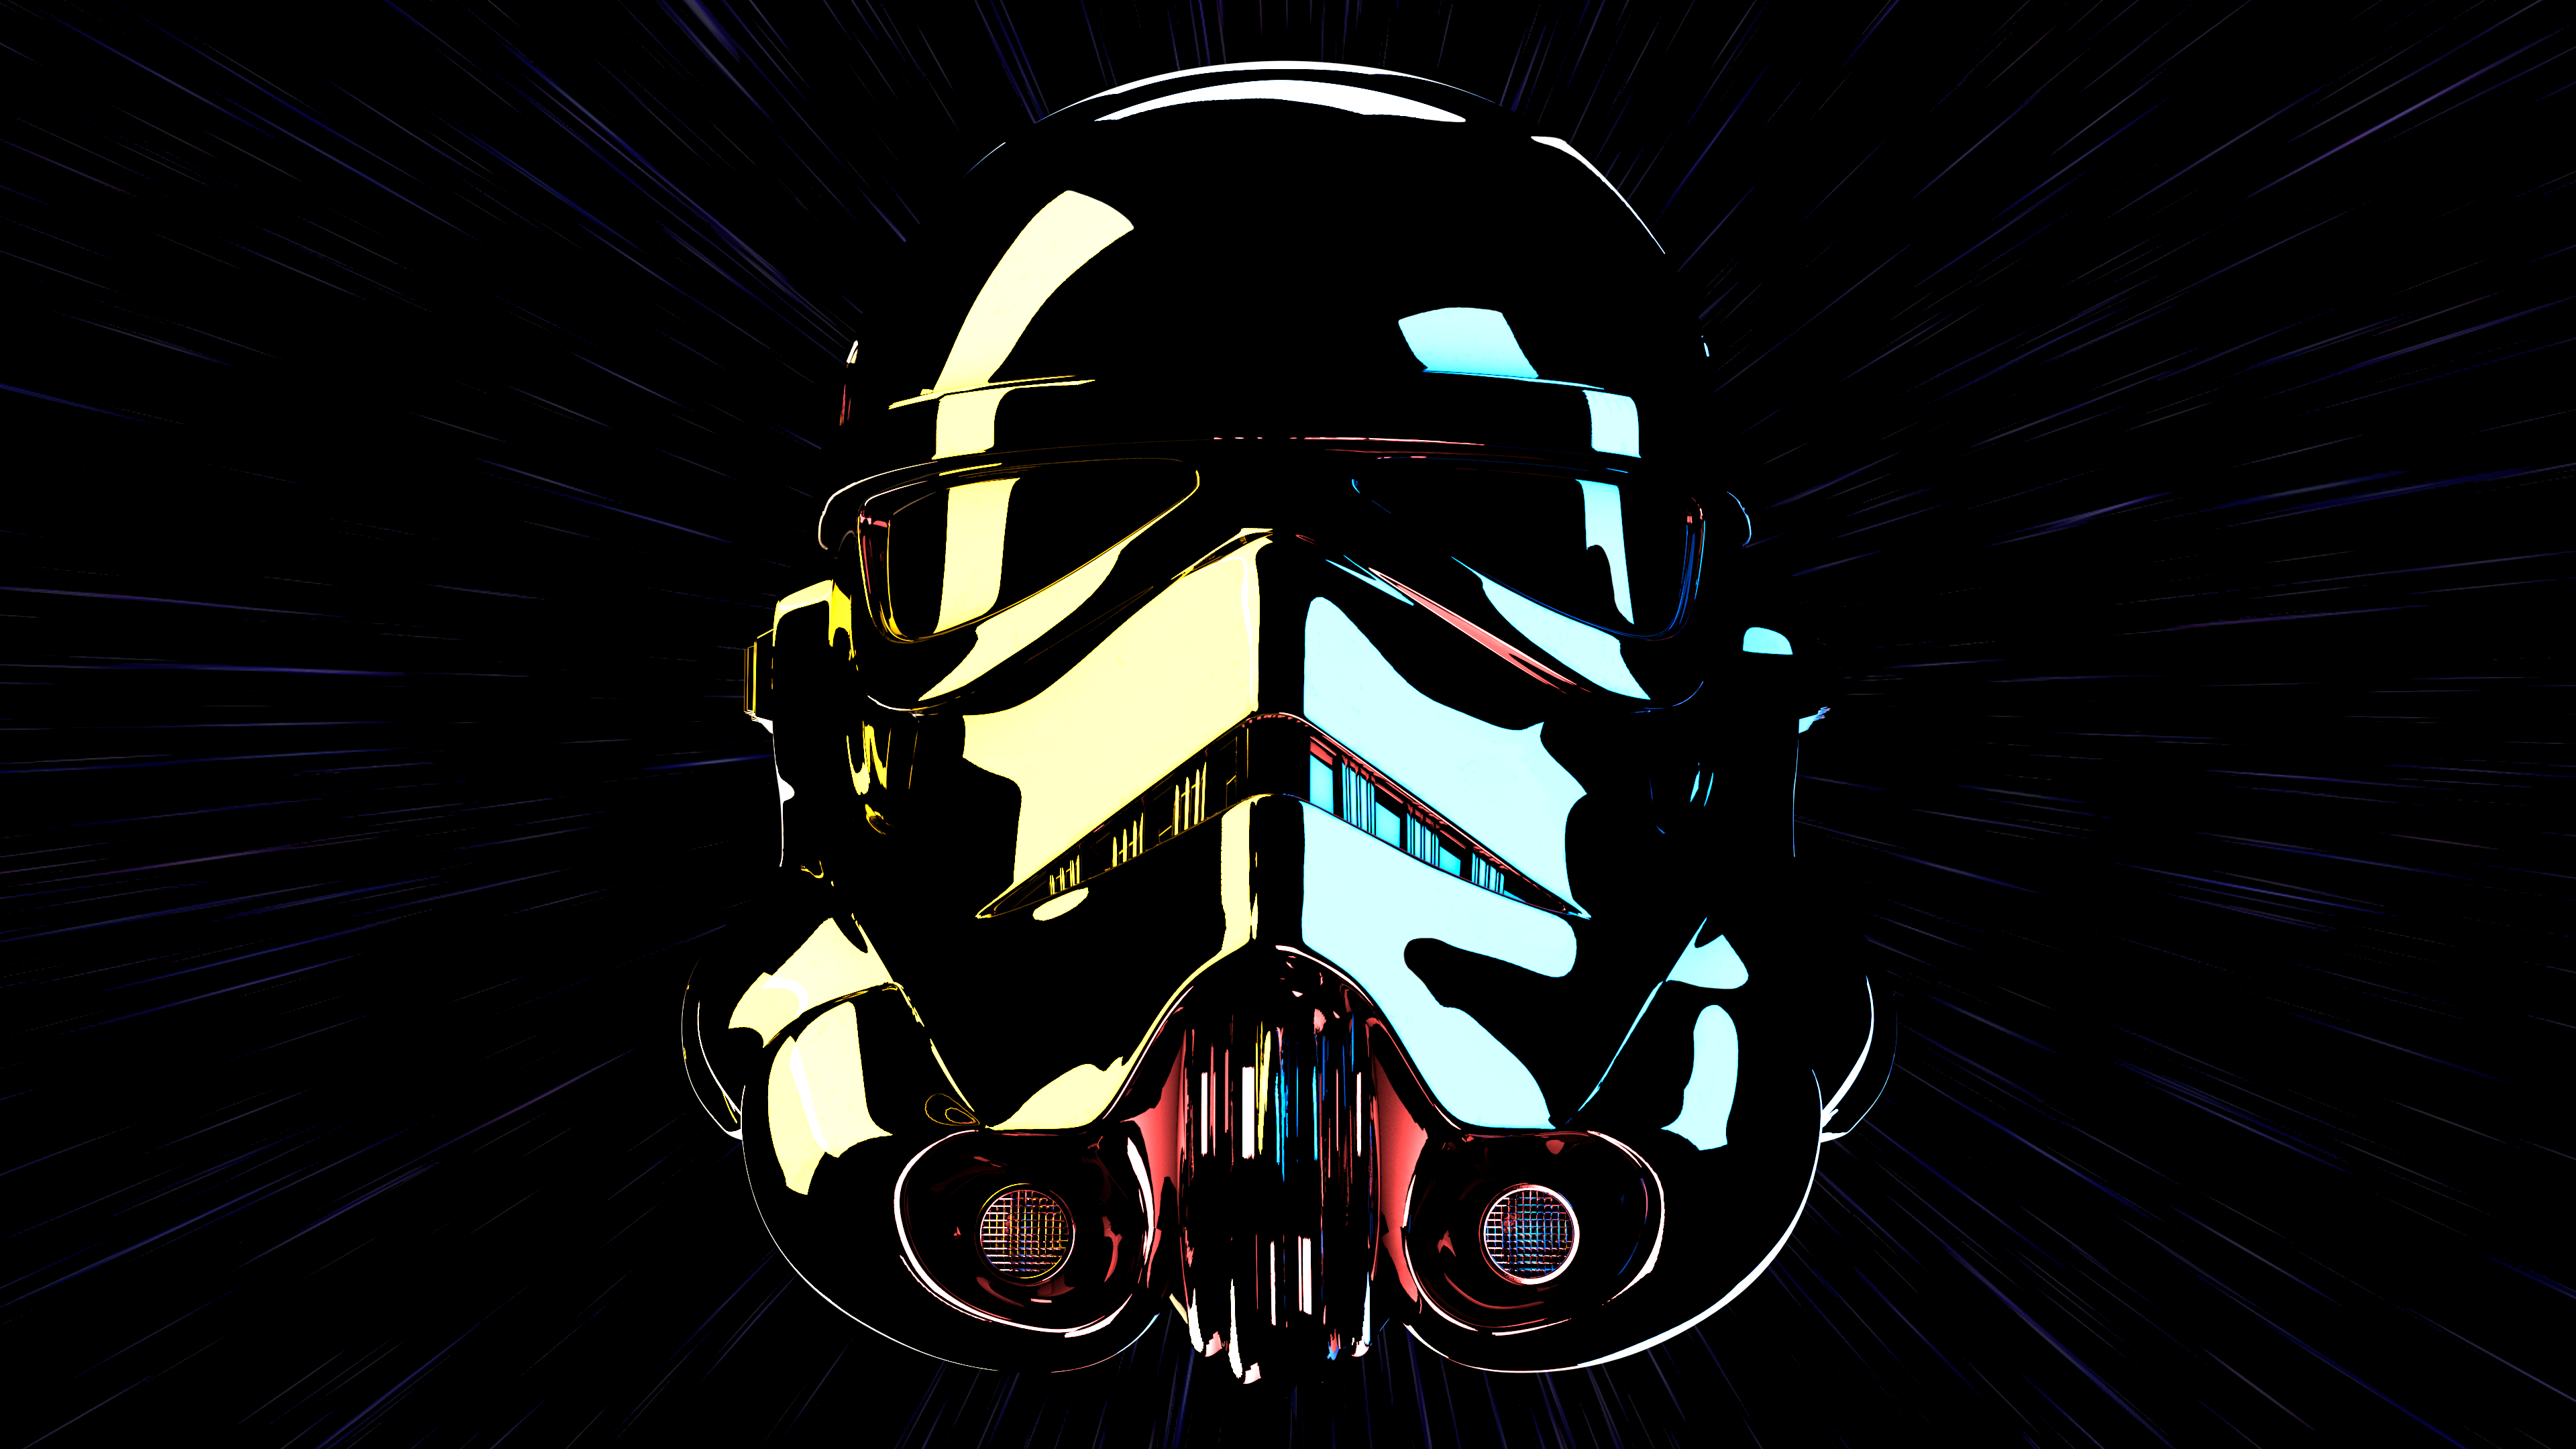 Stormtrooper Wallpaper 4K, Star Wars, Black background, AMOLED, Graphics CGI